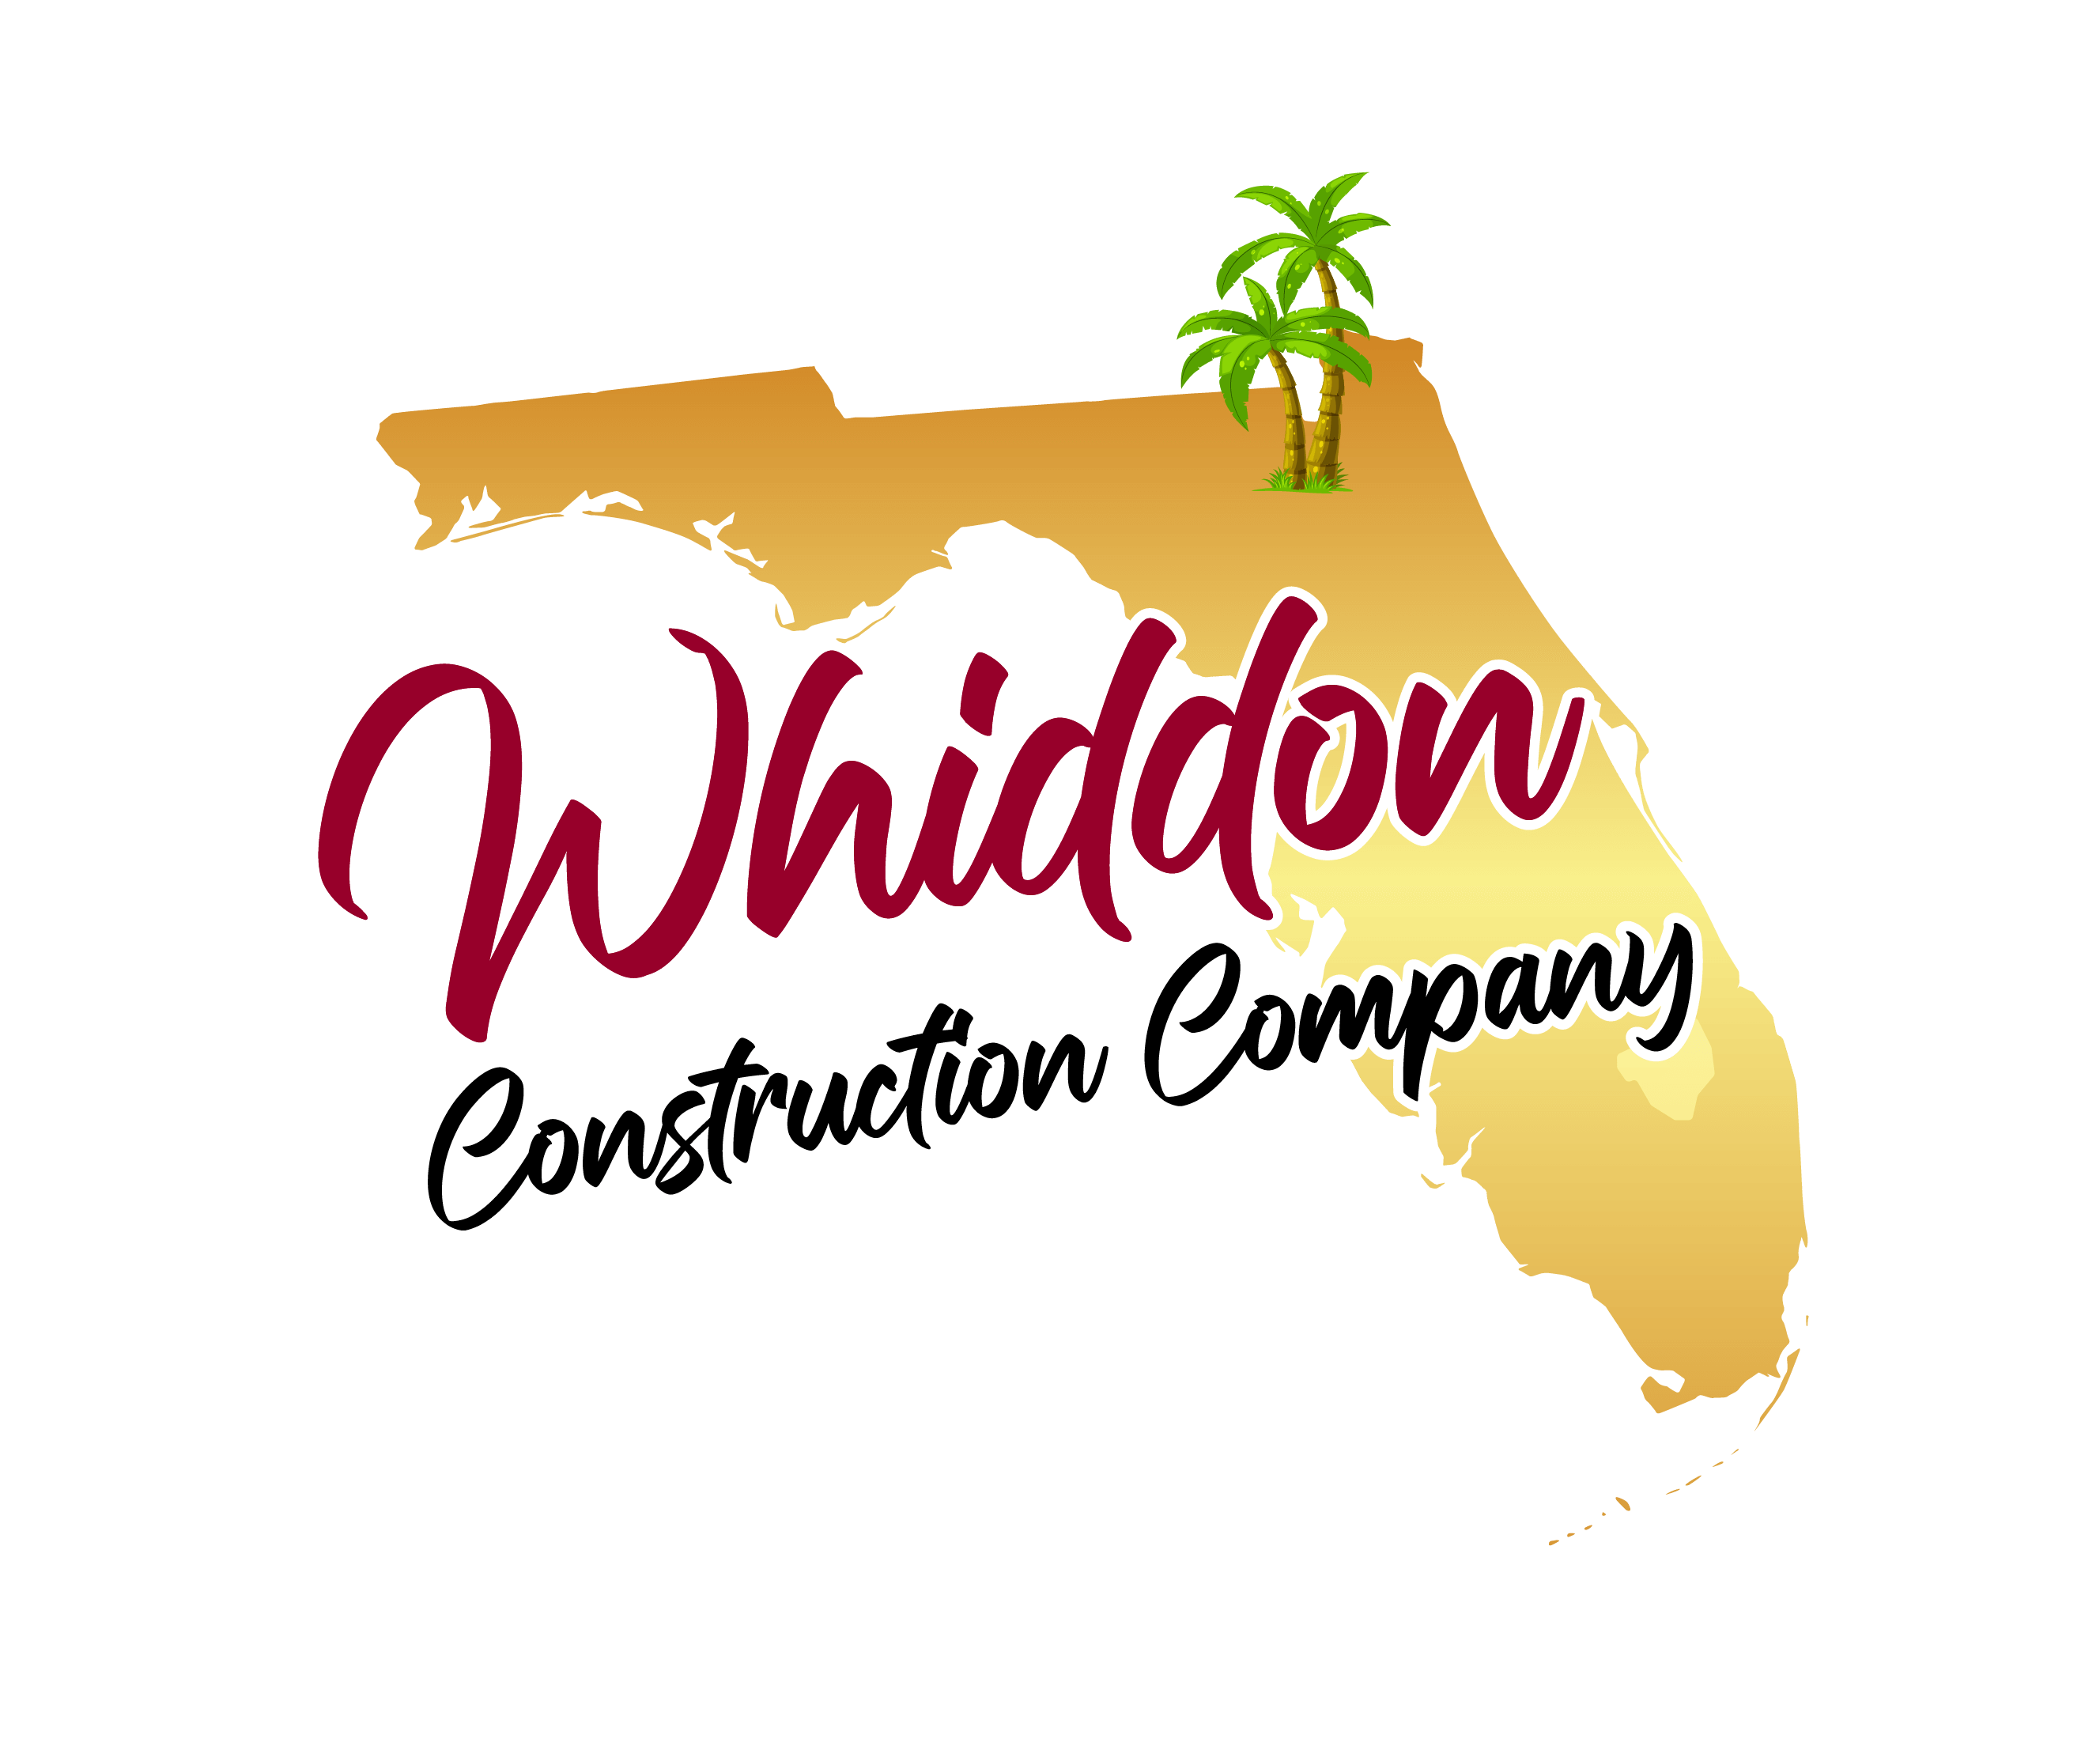 Whiddon Construction Company